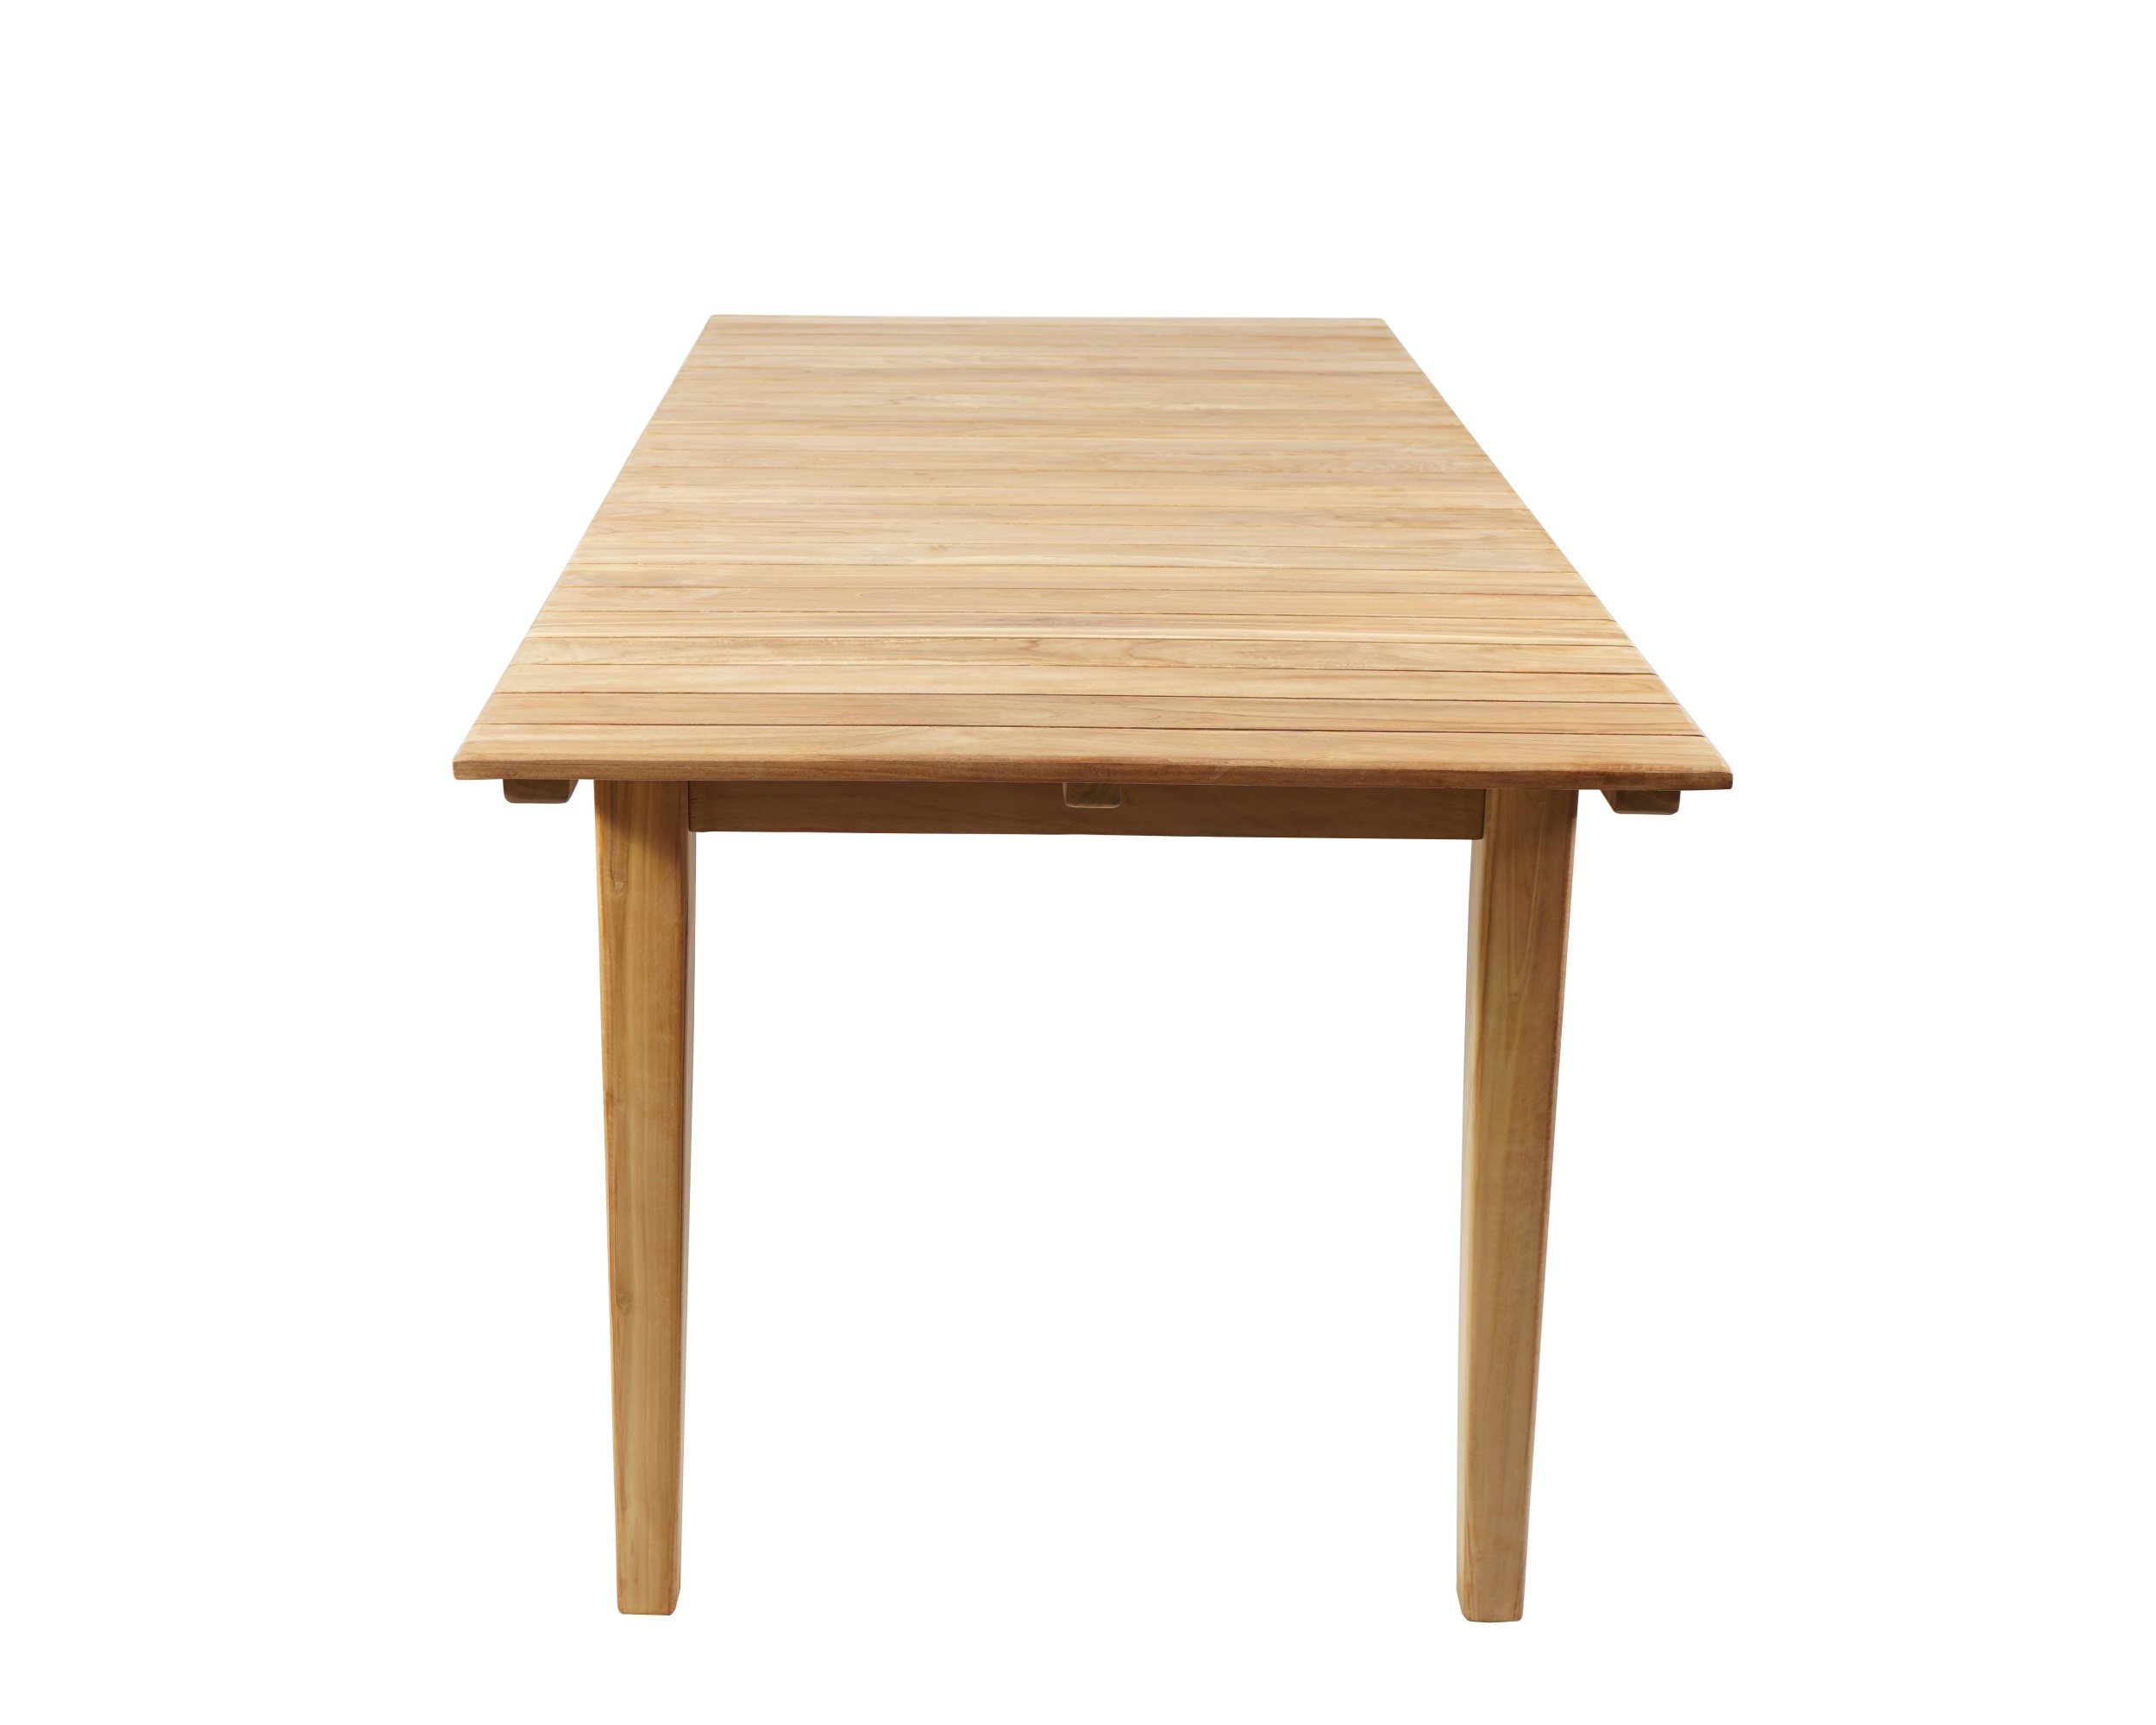 Table de jardin Raryle 200x90 cm en bois de teck